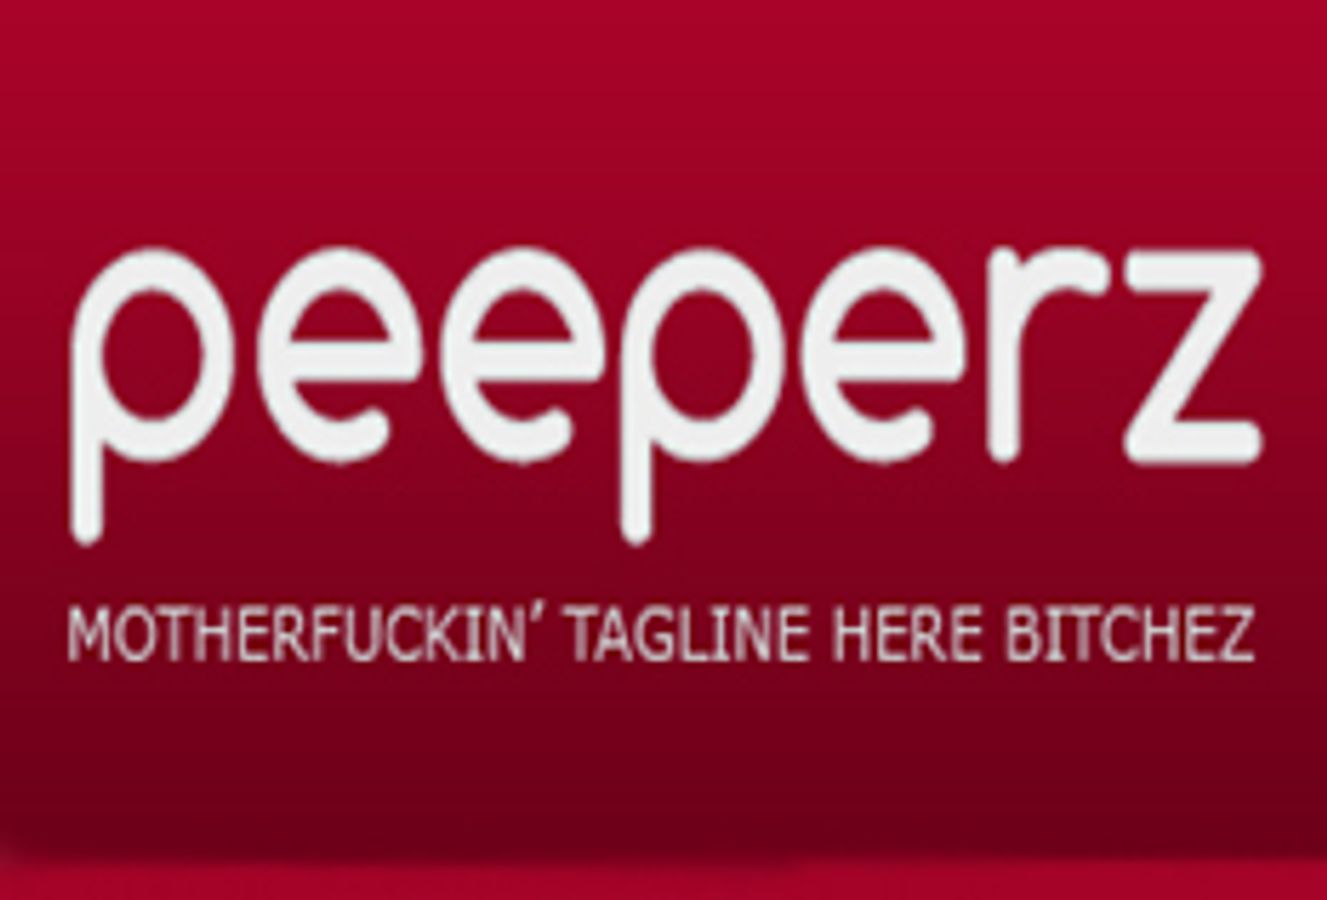 Peeperz.com